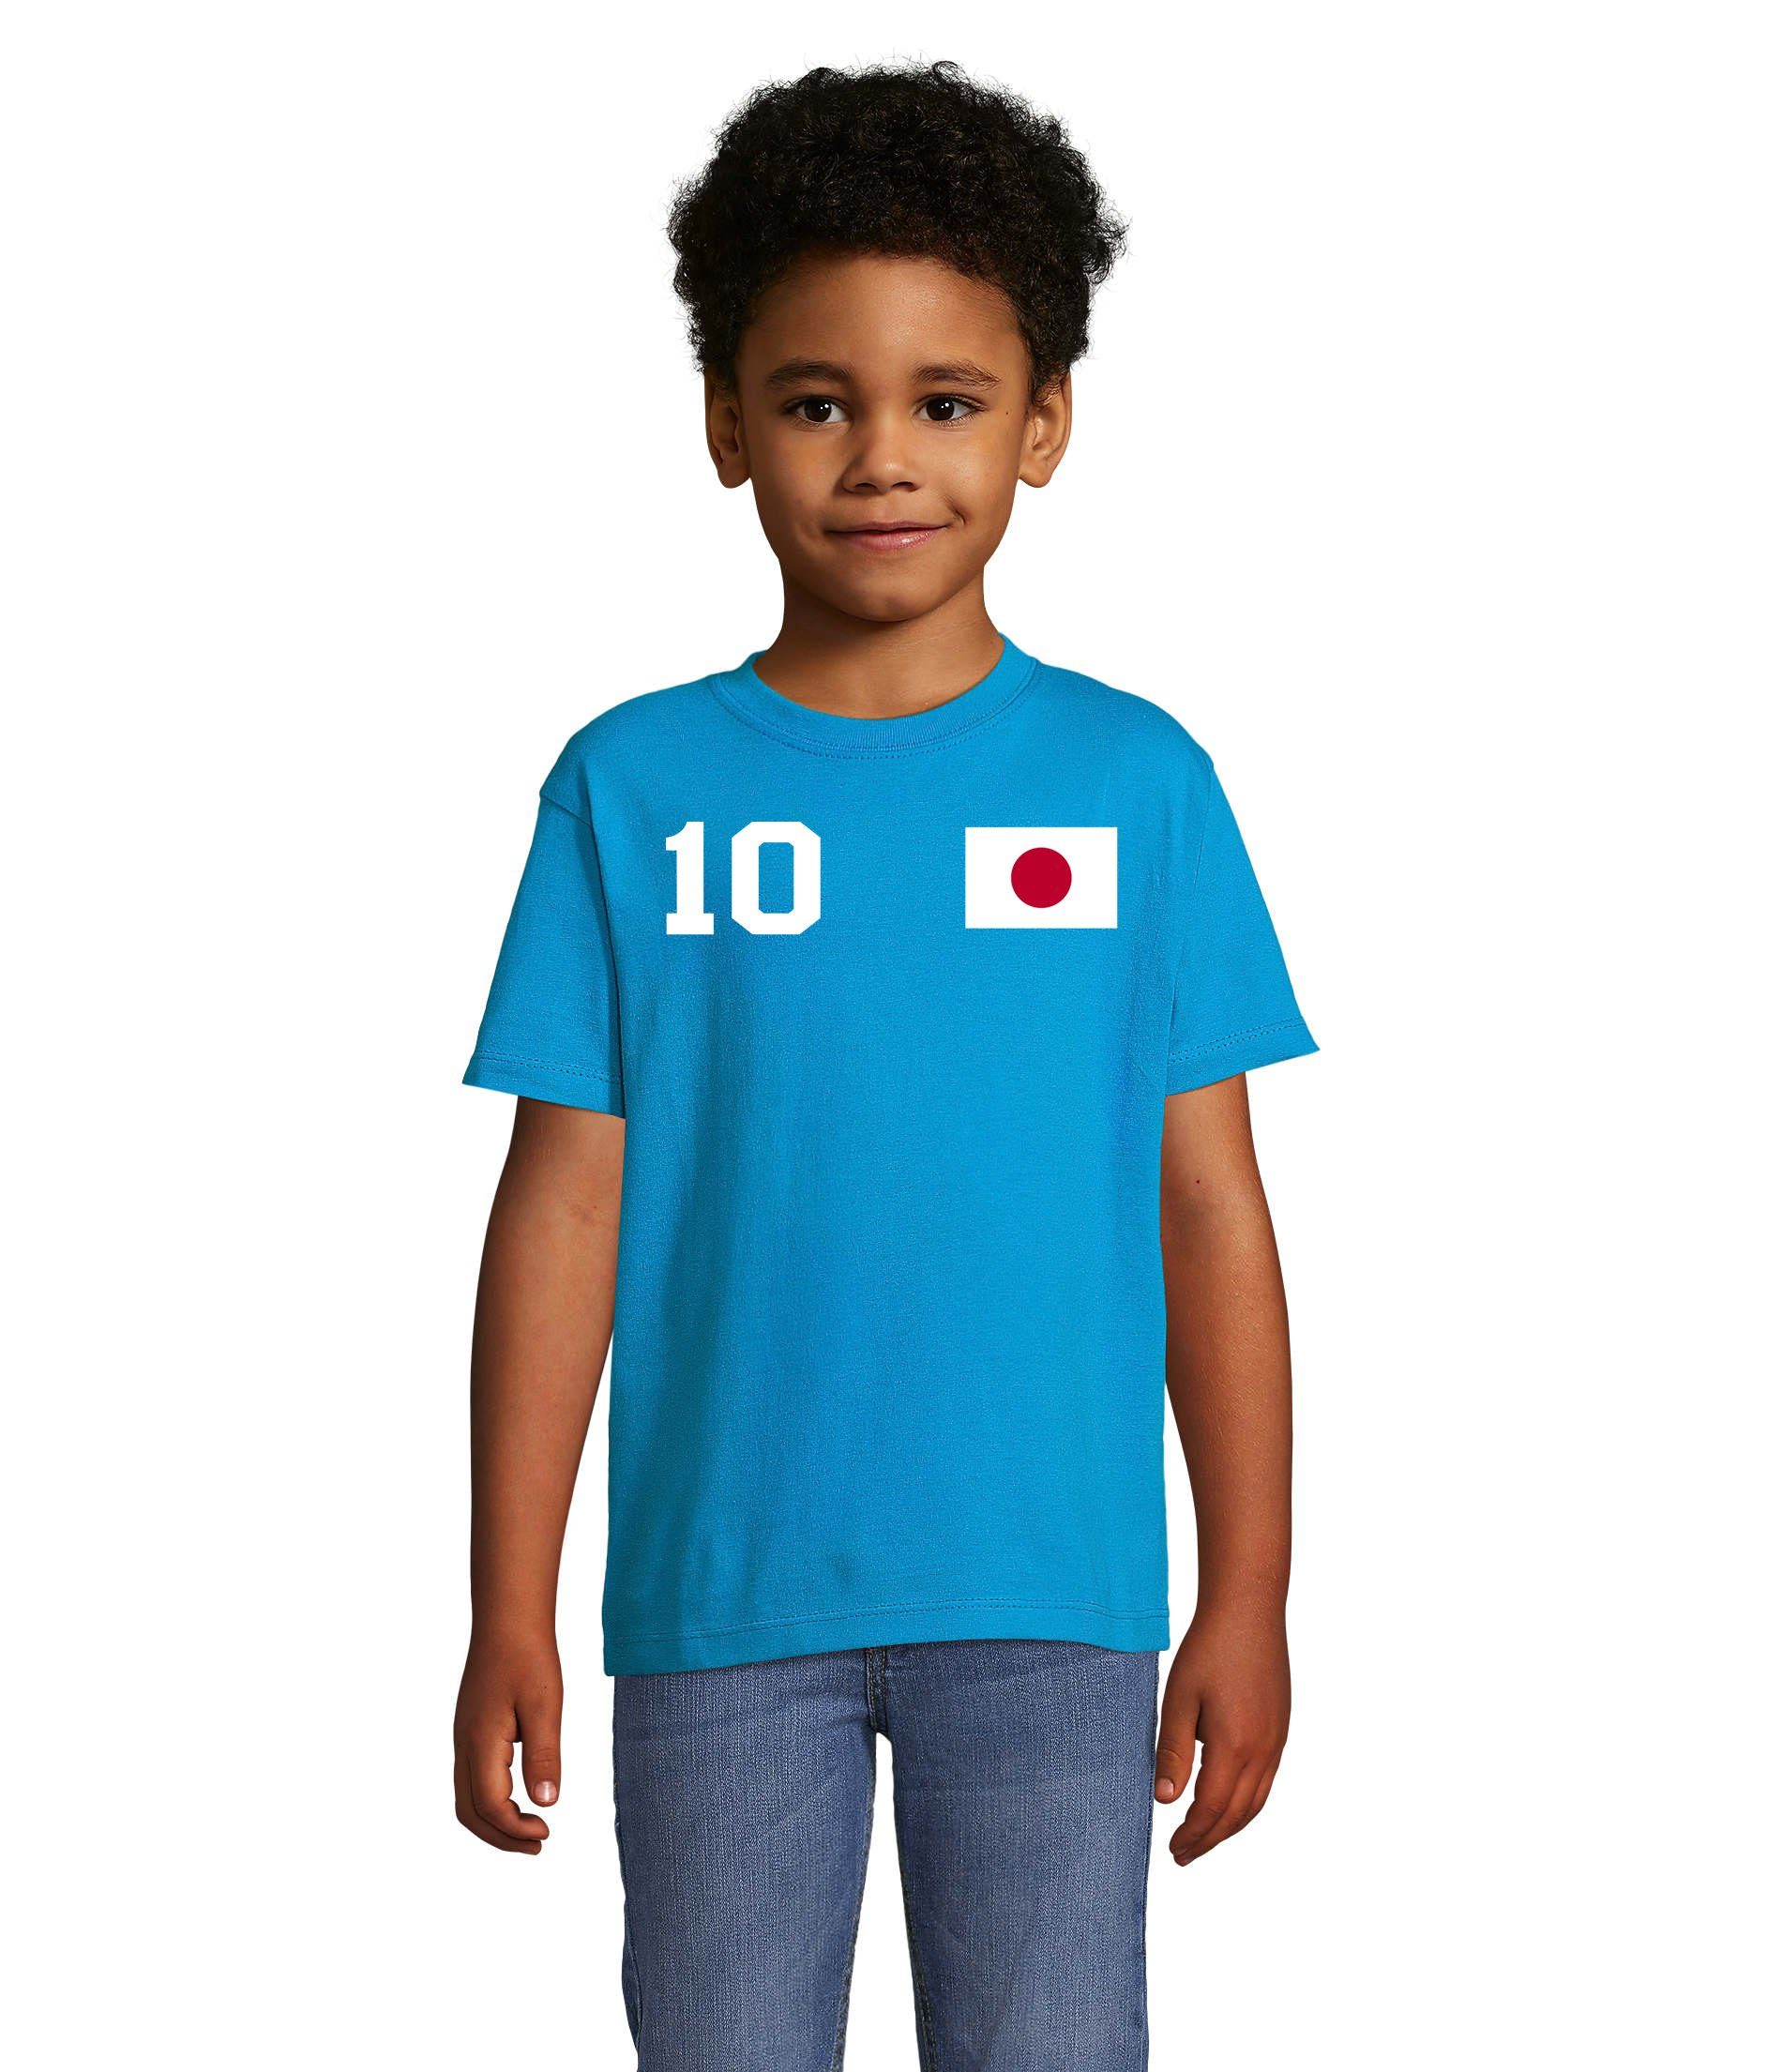 Trikot Weiss/Blau WM Brownie Asien Meister Fußball Kinder Japan Sport T-Shirt & Handball Blondie